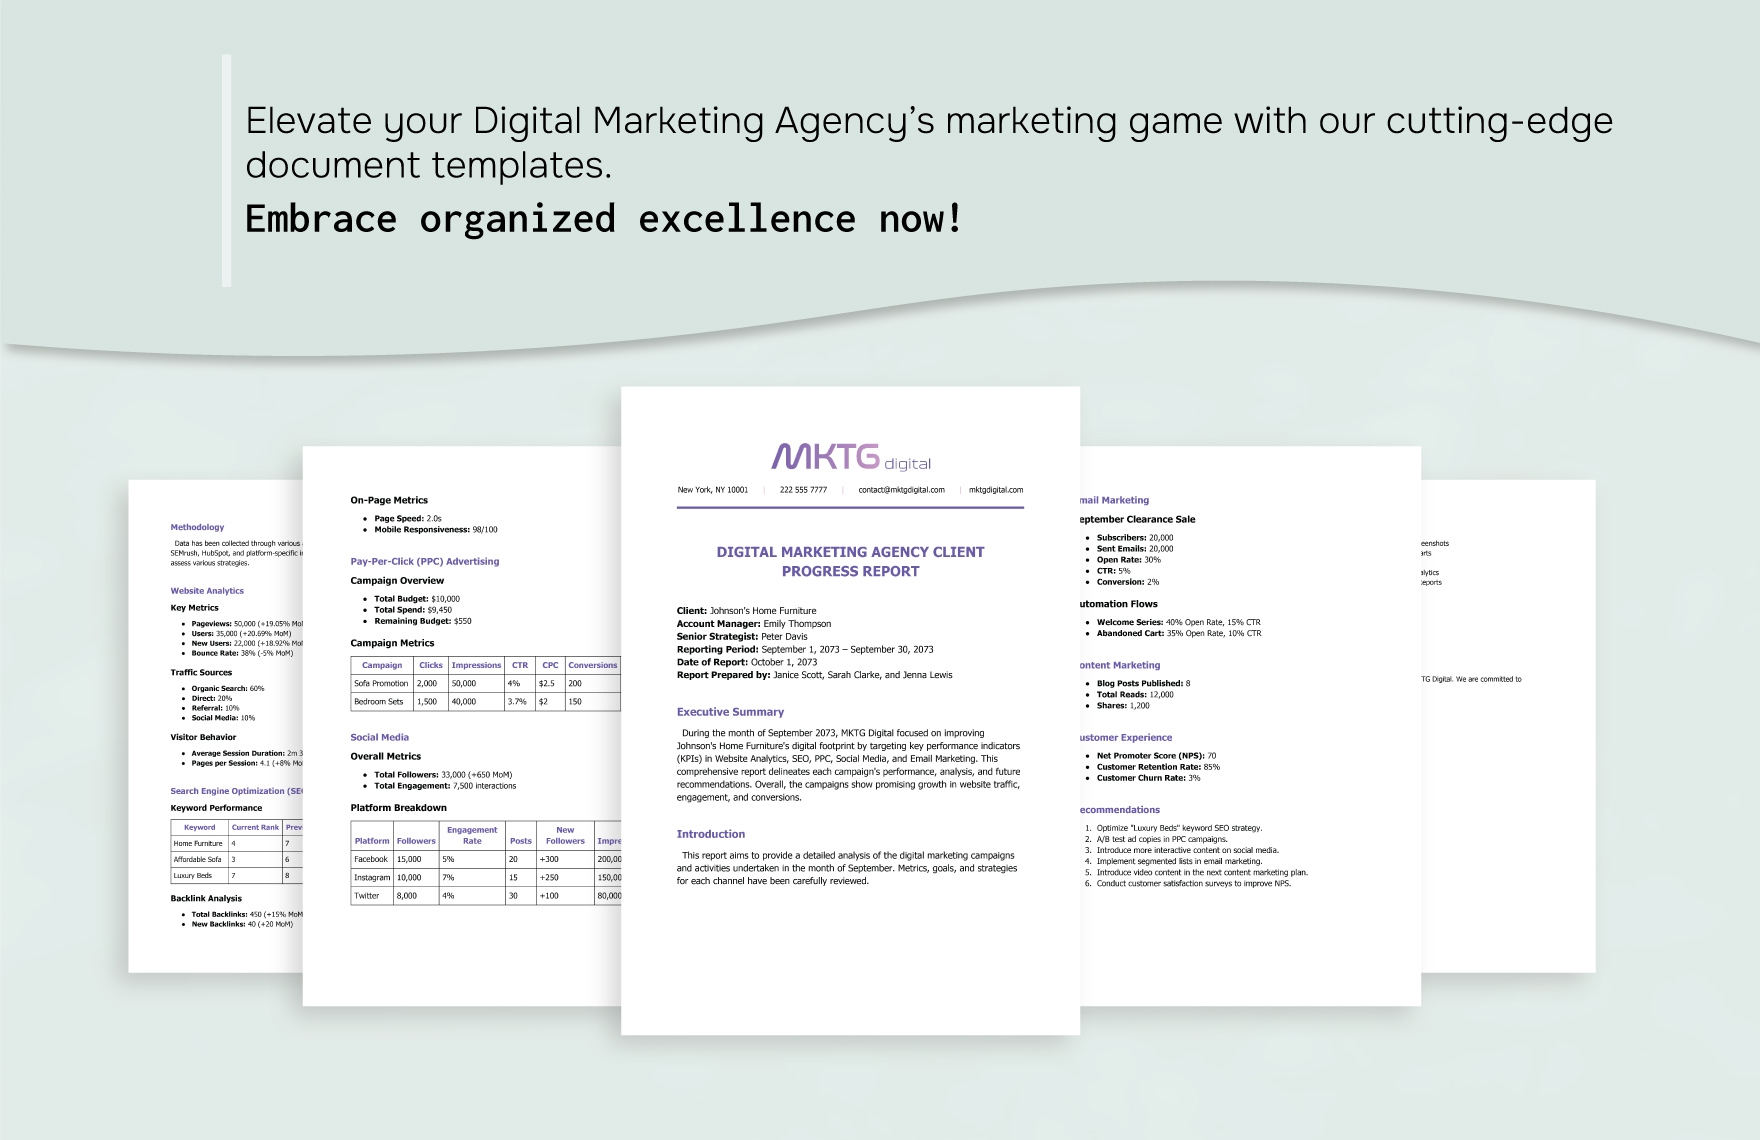 Digital Marketing Agency Client Progress Report Template